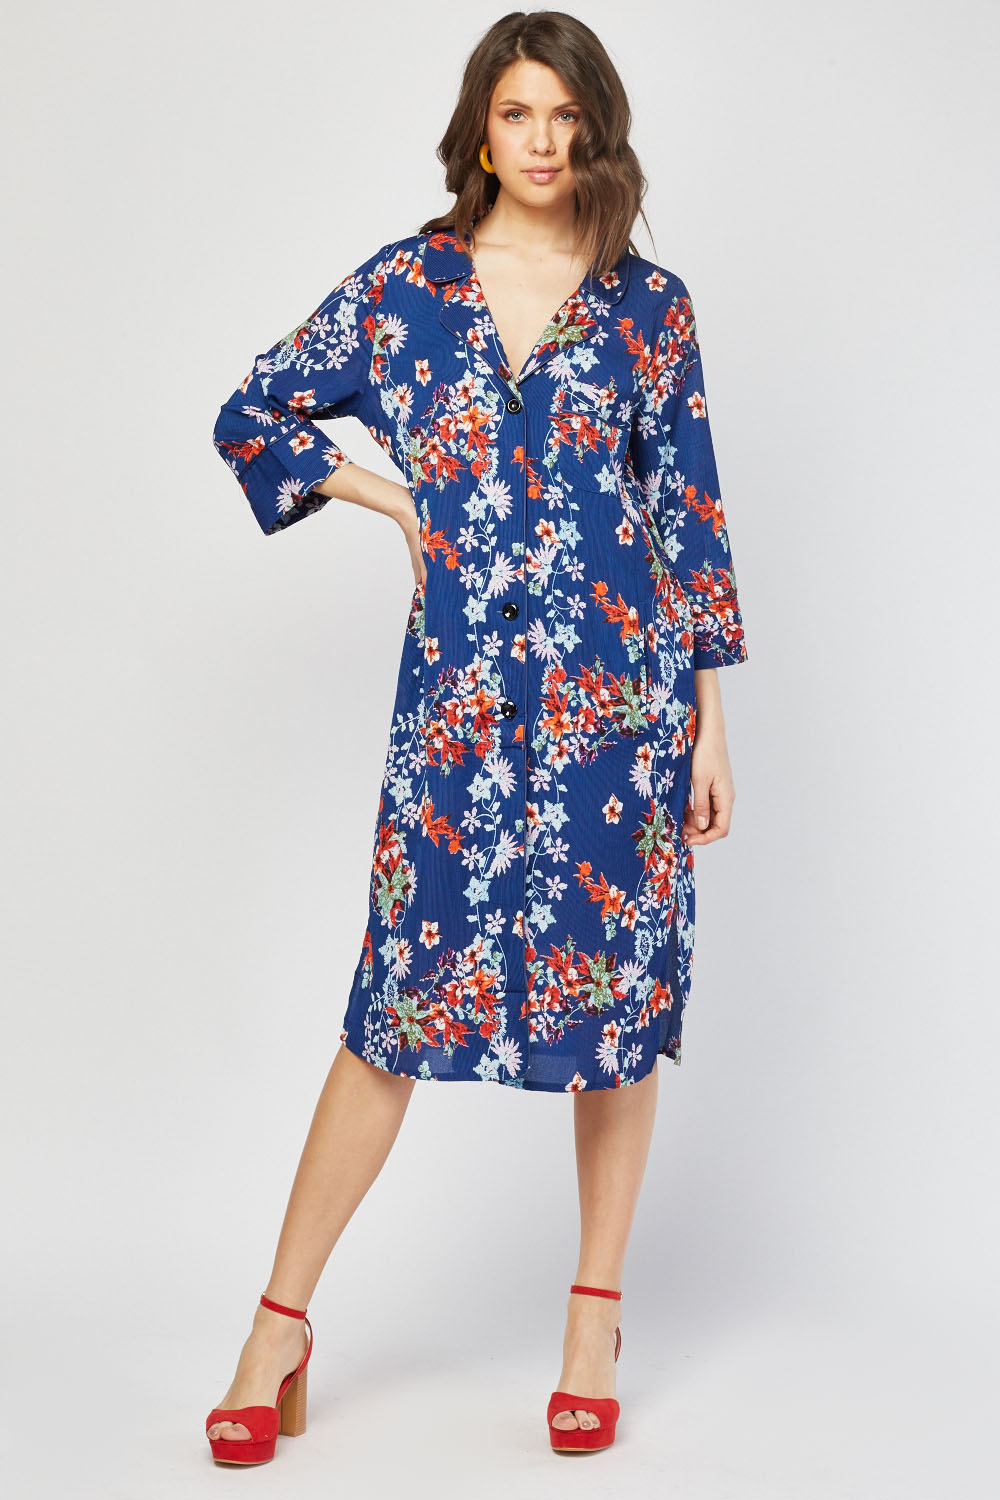 Midi Pyjama Style Shirt Dress - Just $7